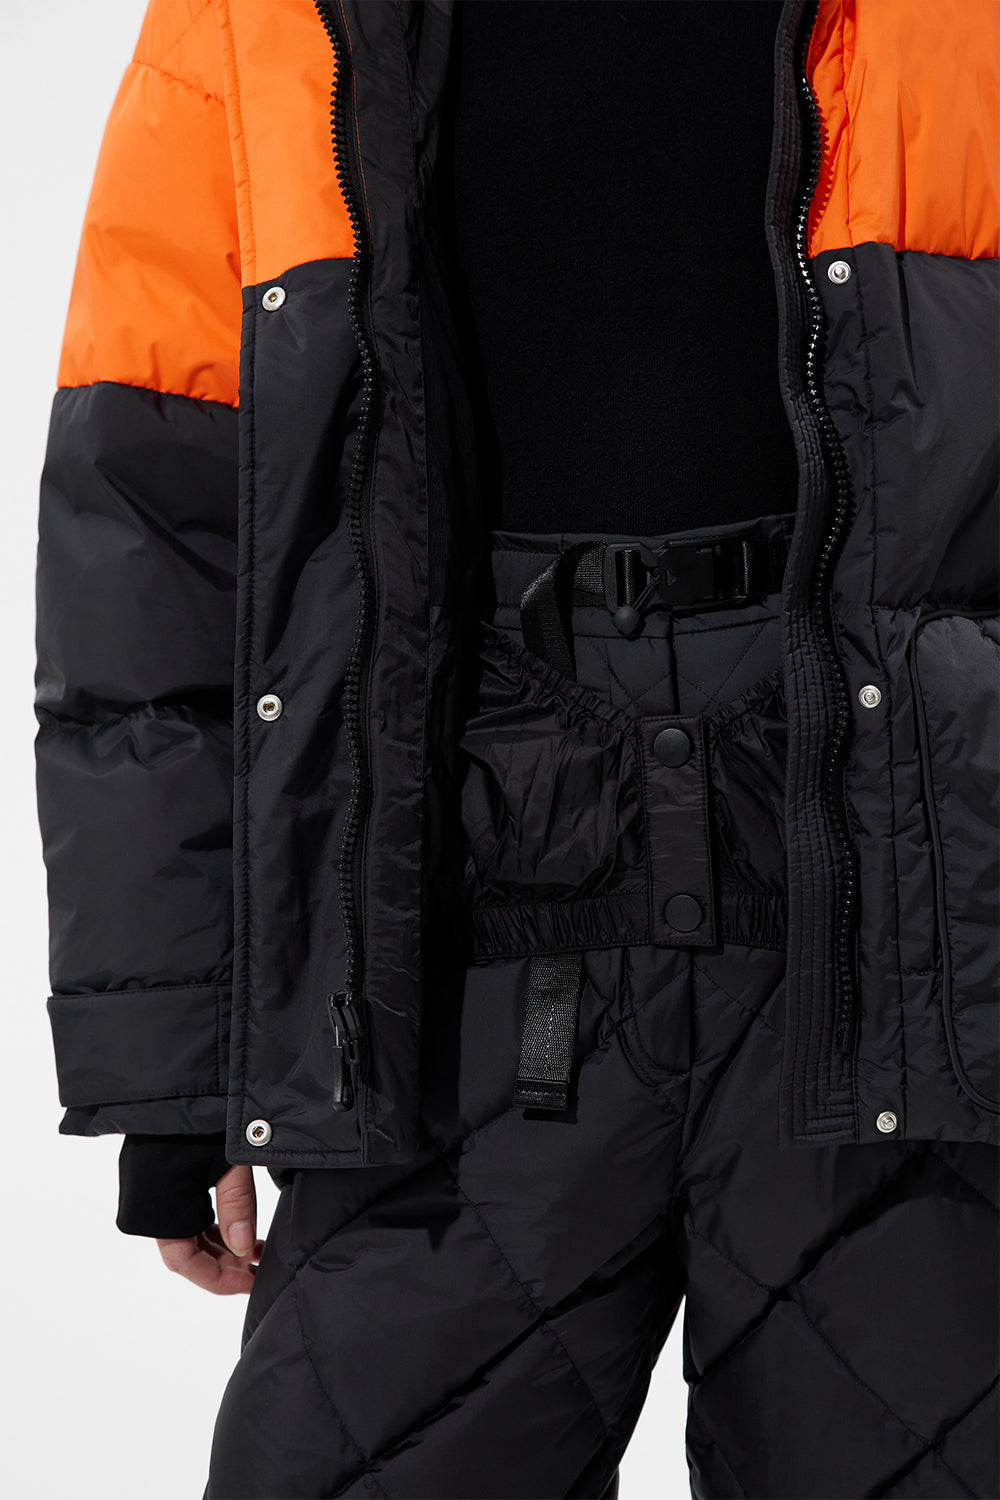 Apres Ski Michlin Jacket Tec Orange + Tec Black